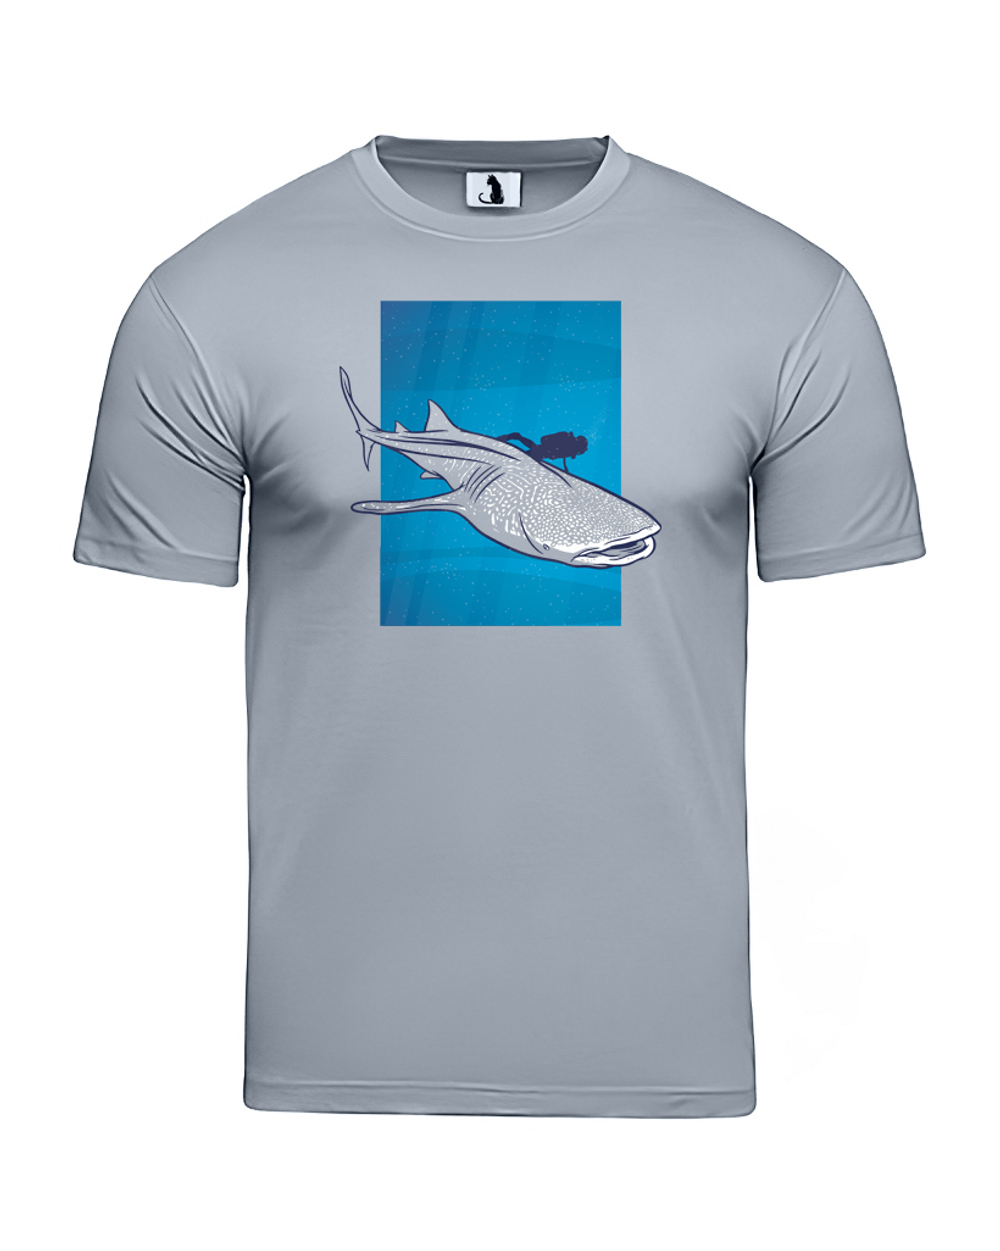 Футболка Китовая акула мужская серая